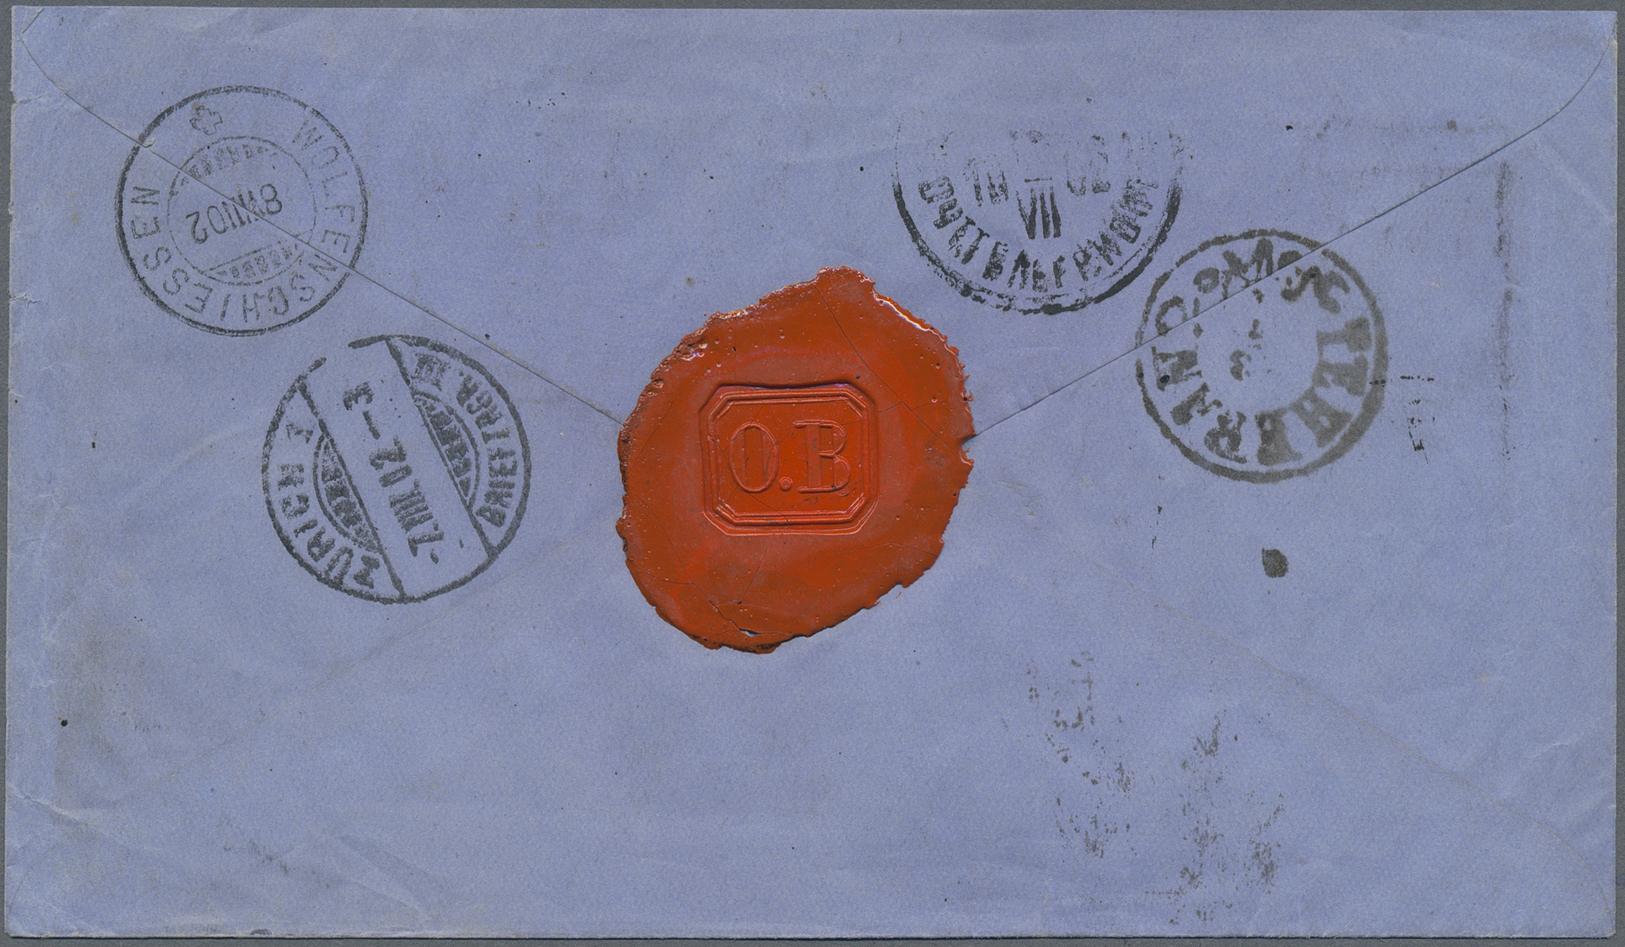 Br Iran: 1902. Registered Envelope Addressed To Switzerland Bearing Yvert 152, 12c Blue (2) Tied By Sultanabad Date Stam - Iran